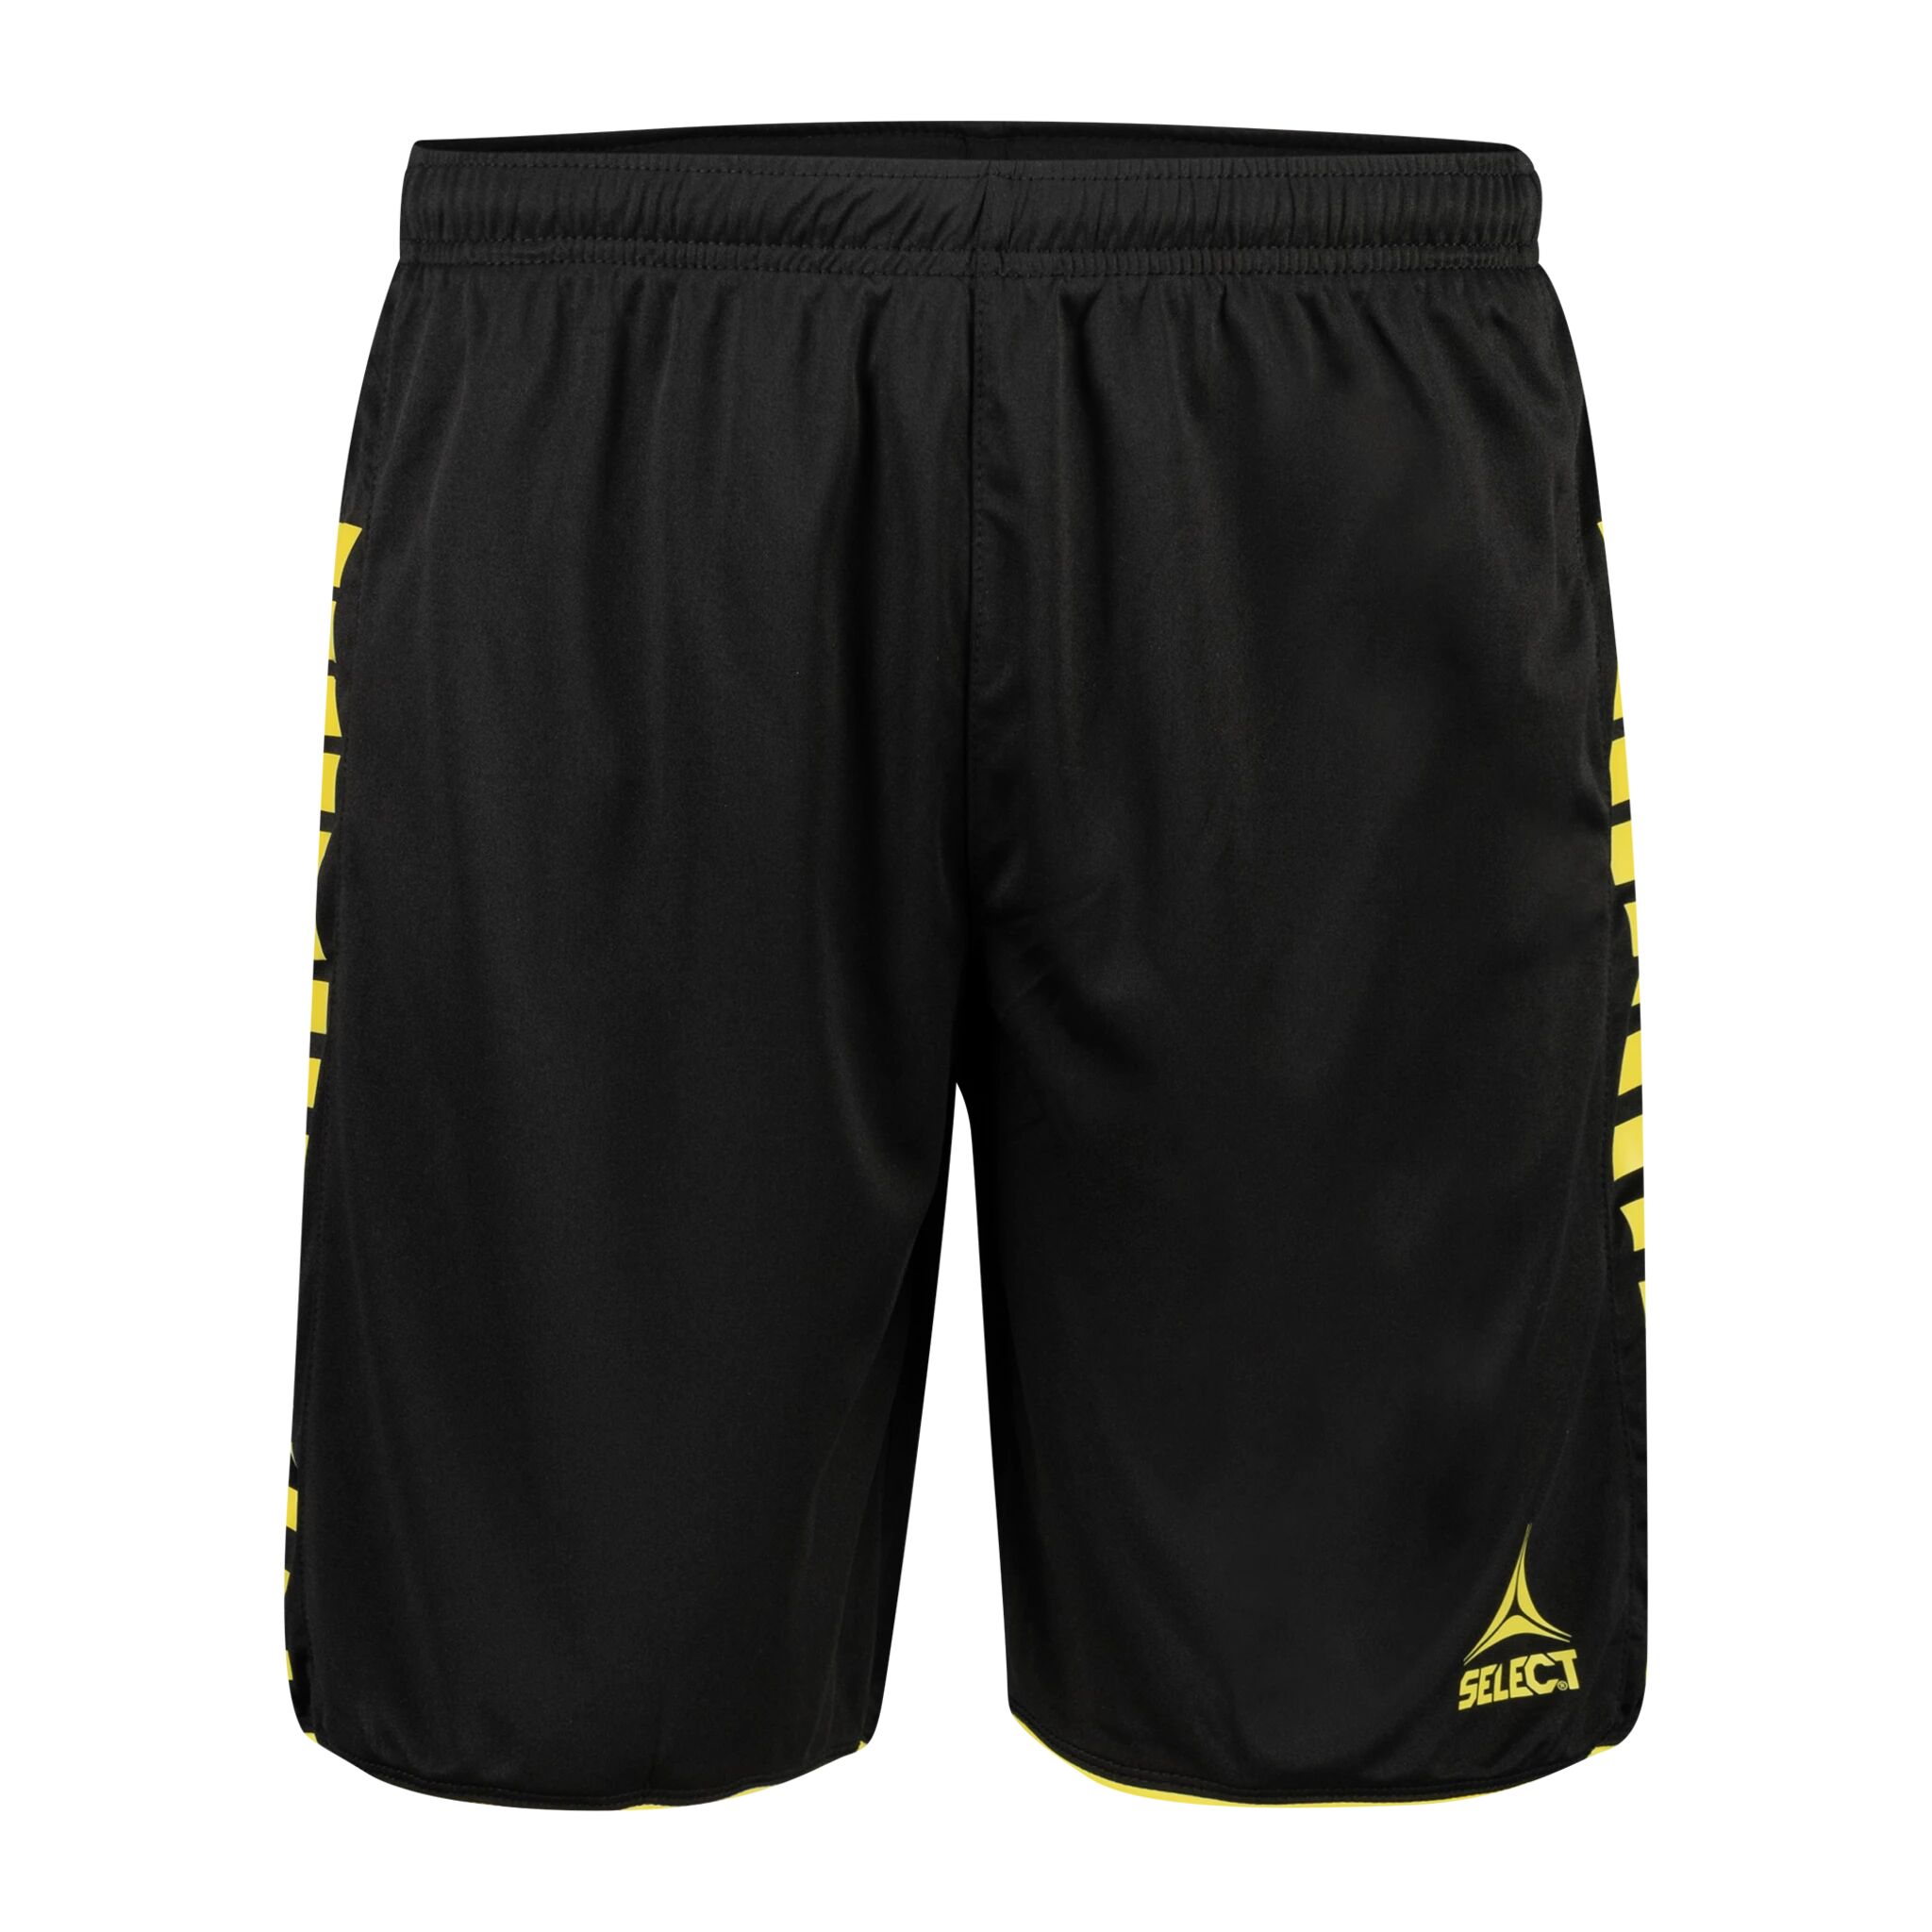 Select Player shorts Argentina, shorts Junior/Senior XXXL Black/Yellow